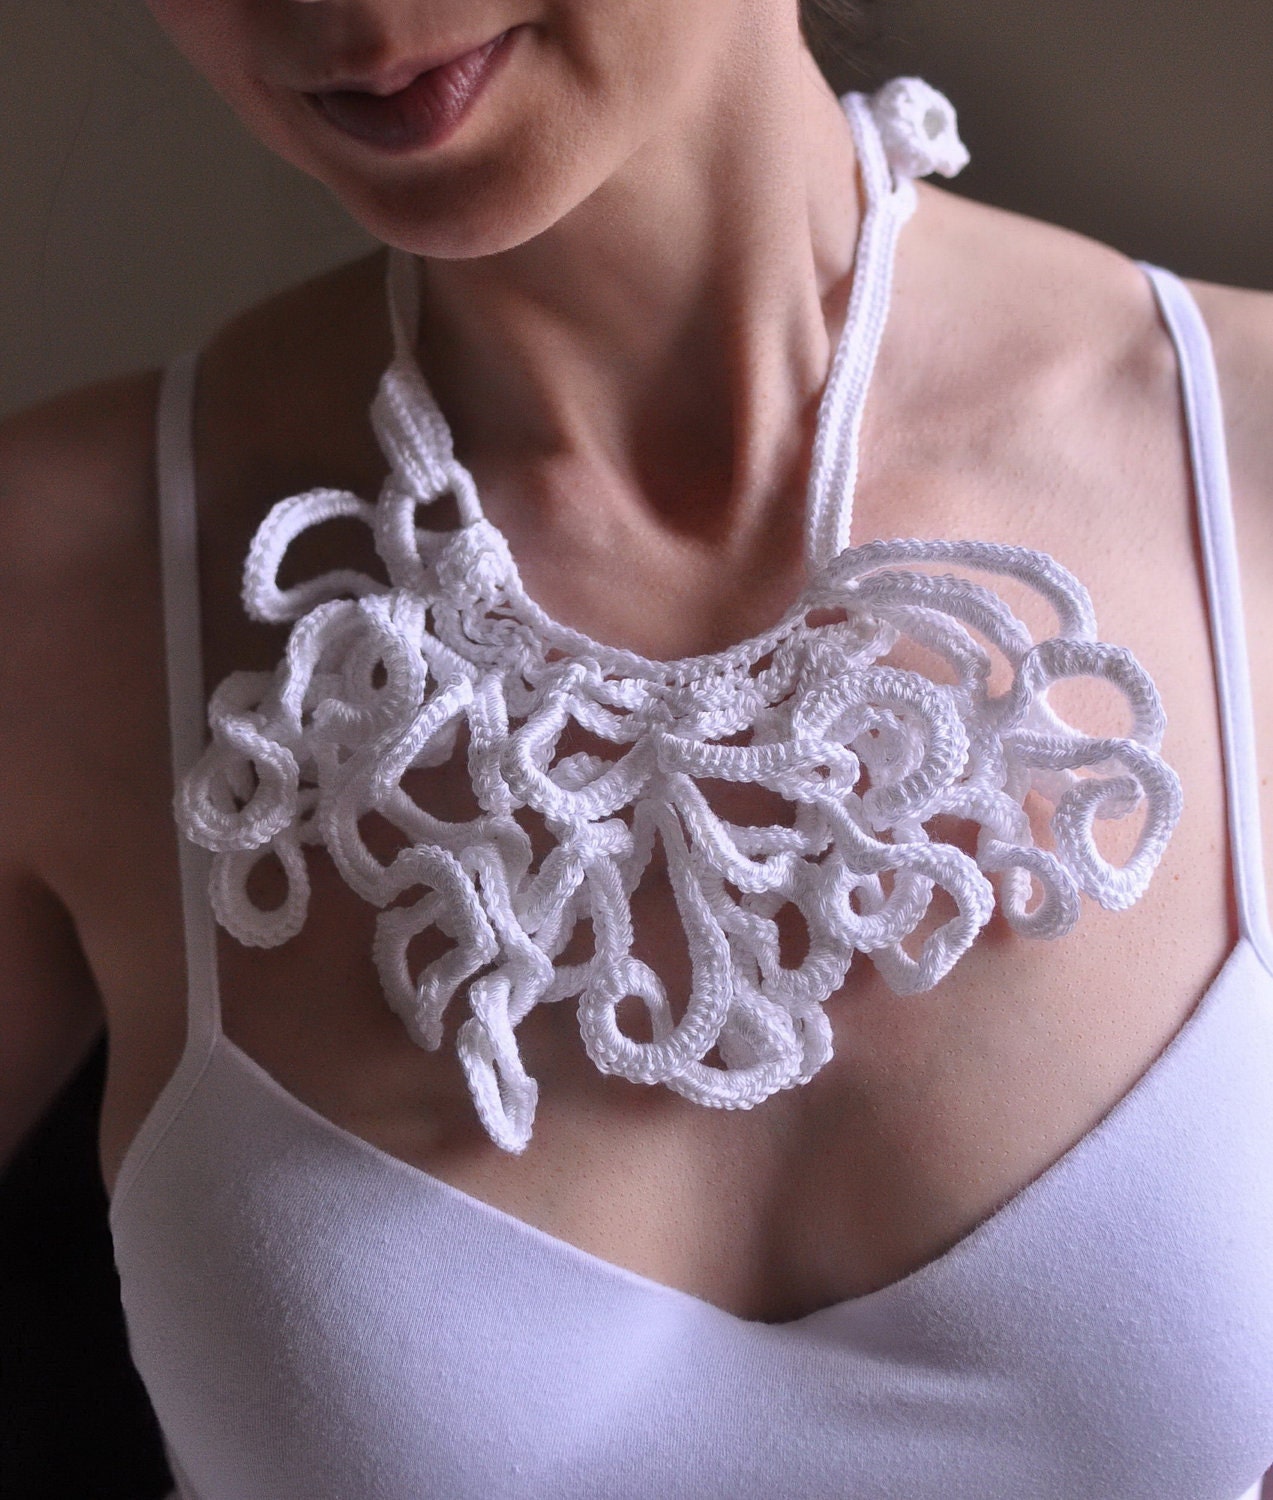 NEW DESIGN - Medusa - OOAK freeform crocheted necklace / neckwear / fiber jewelry / fiber art